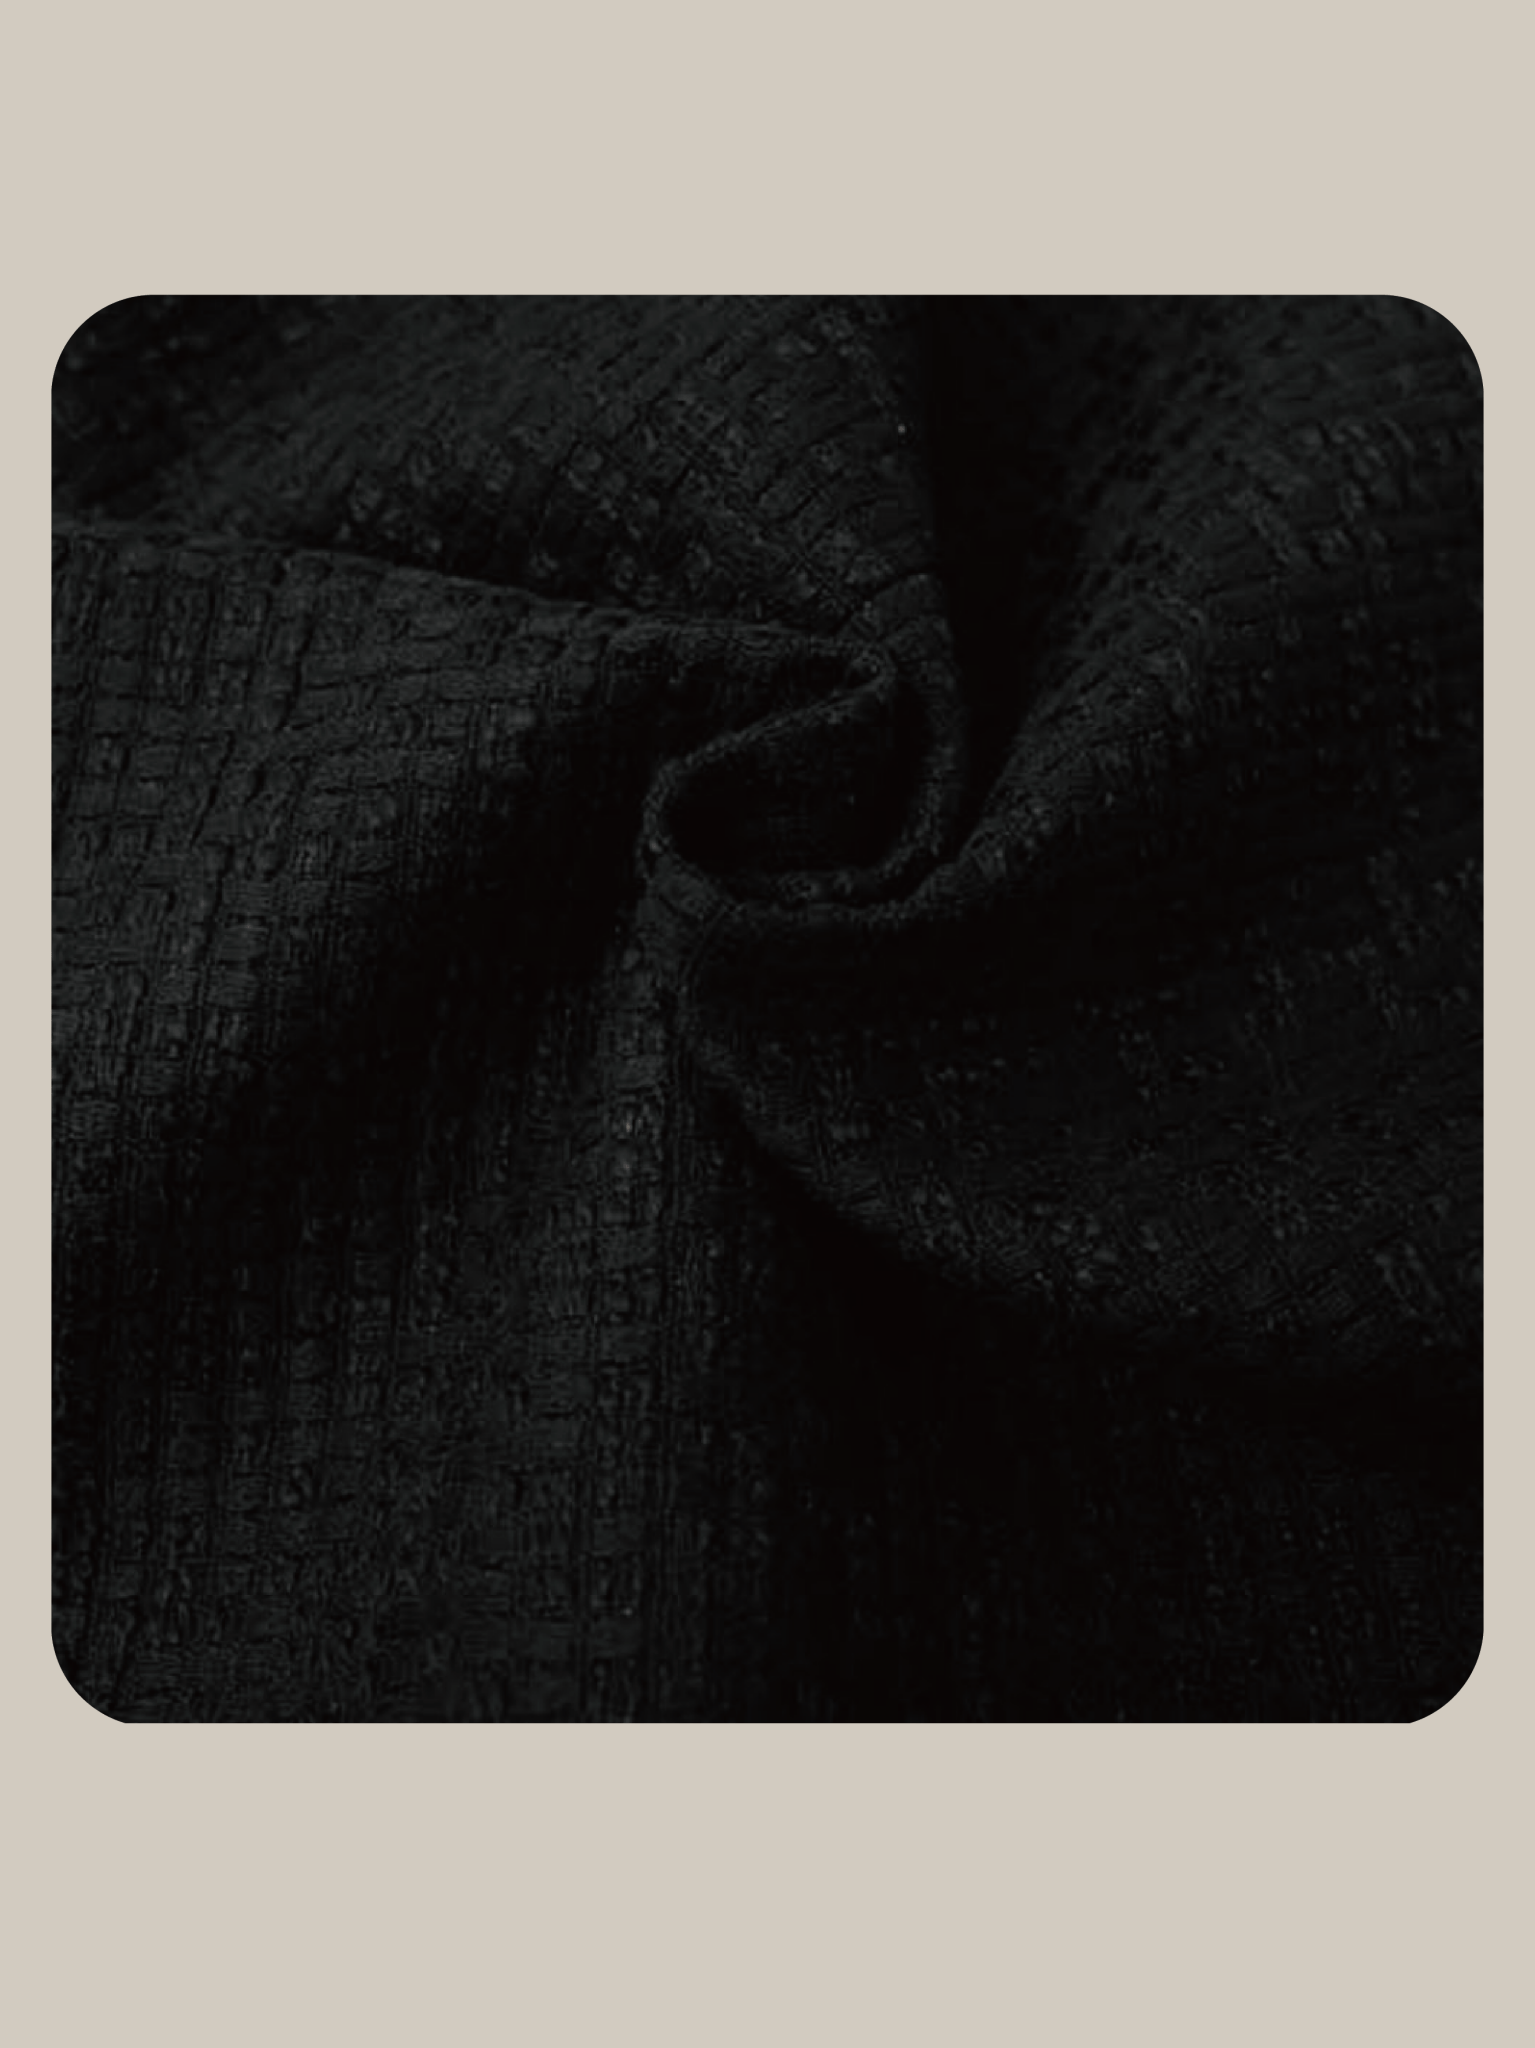 Lined Vintage Style Tweed Jacket - LOVE POMME POMME